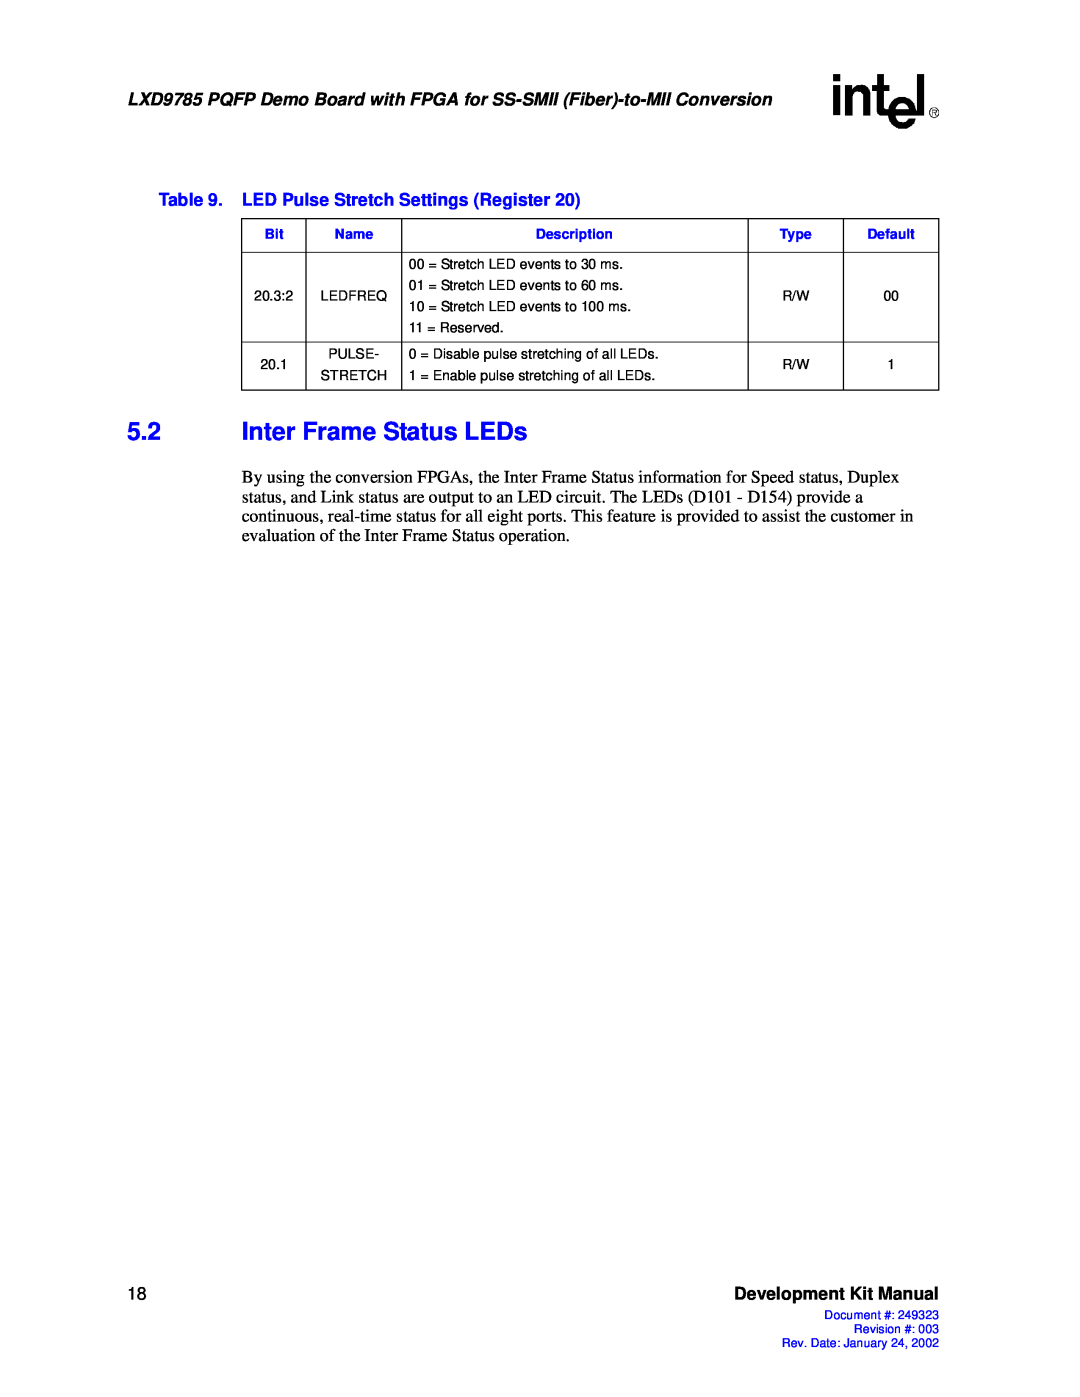 Intel 249323-003 manual Inter Frame Status LEDs, LED Pulse Stretch Settings Register 